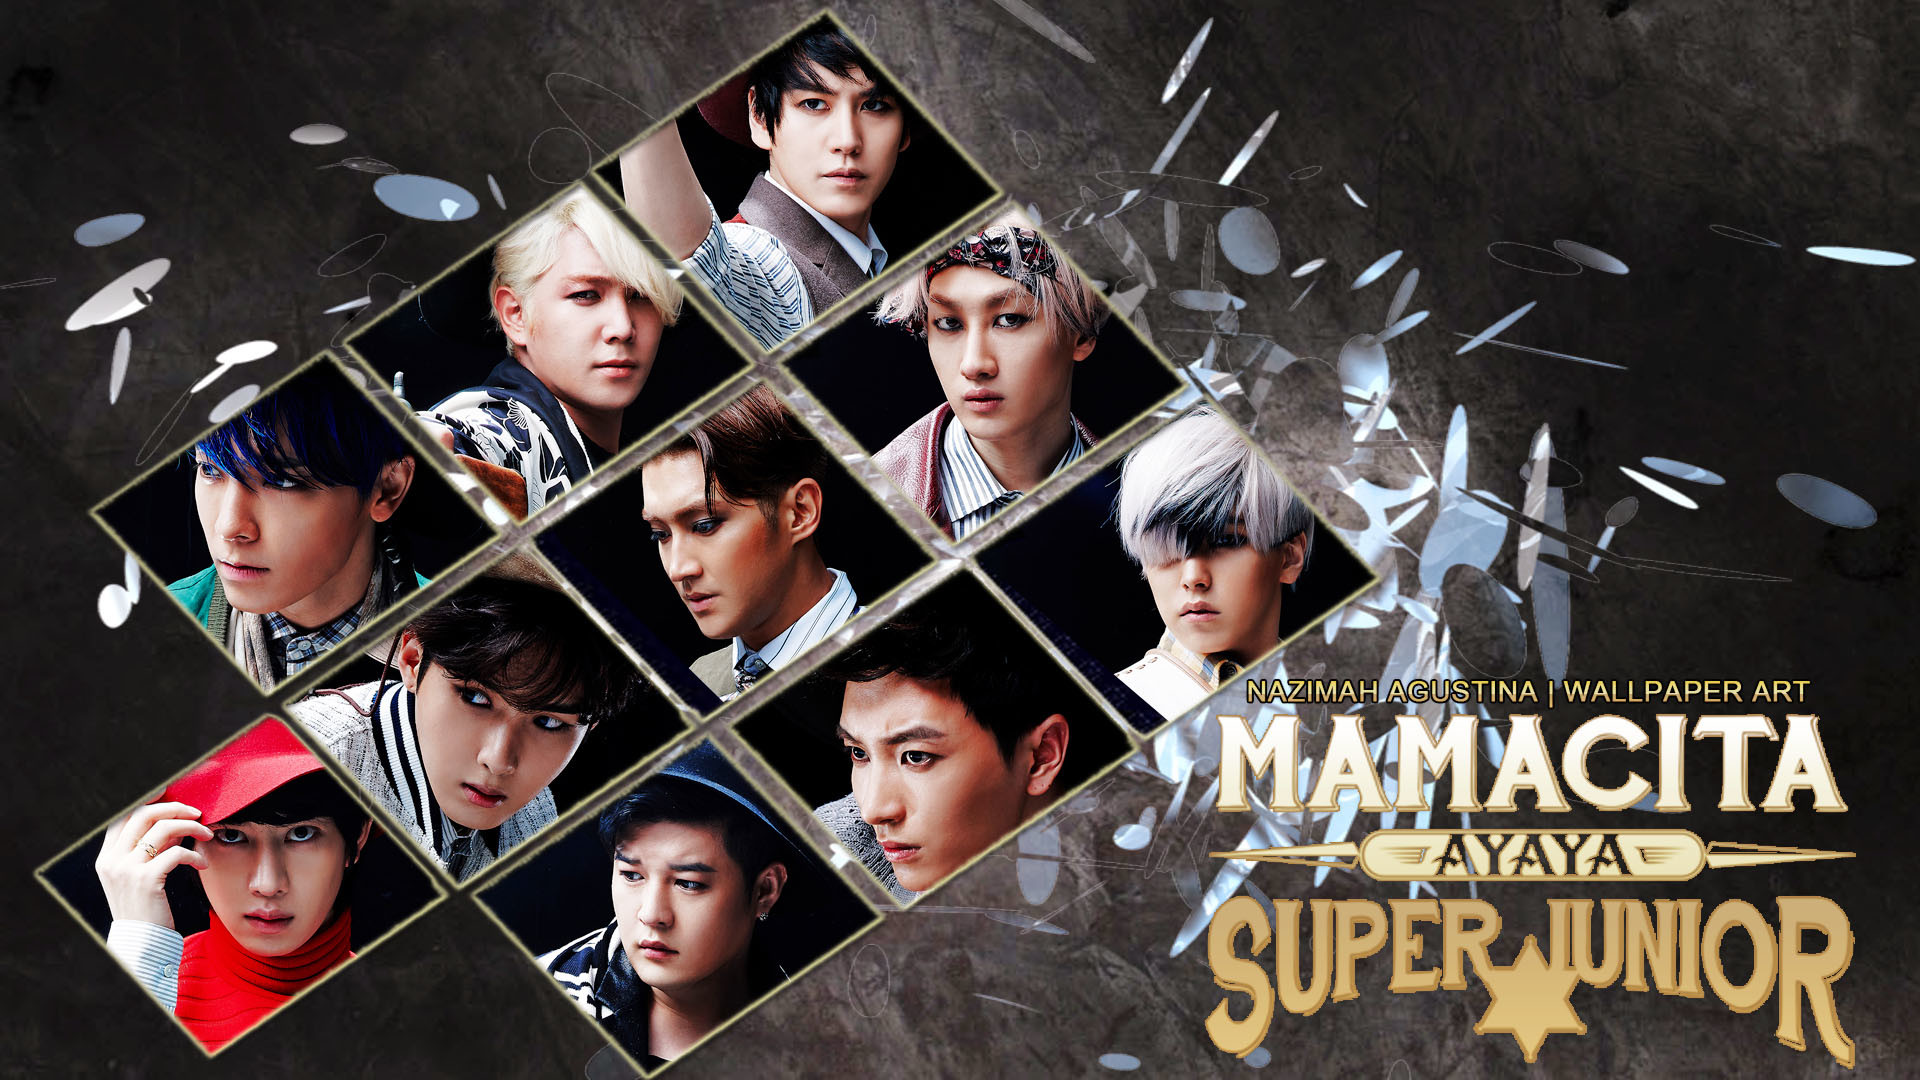 Super Junior Wallpaper Image